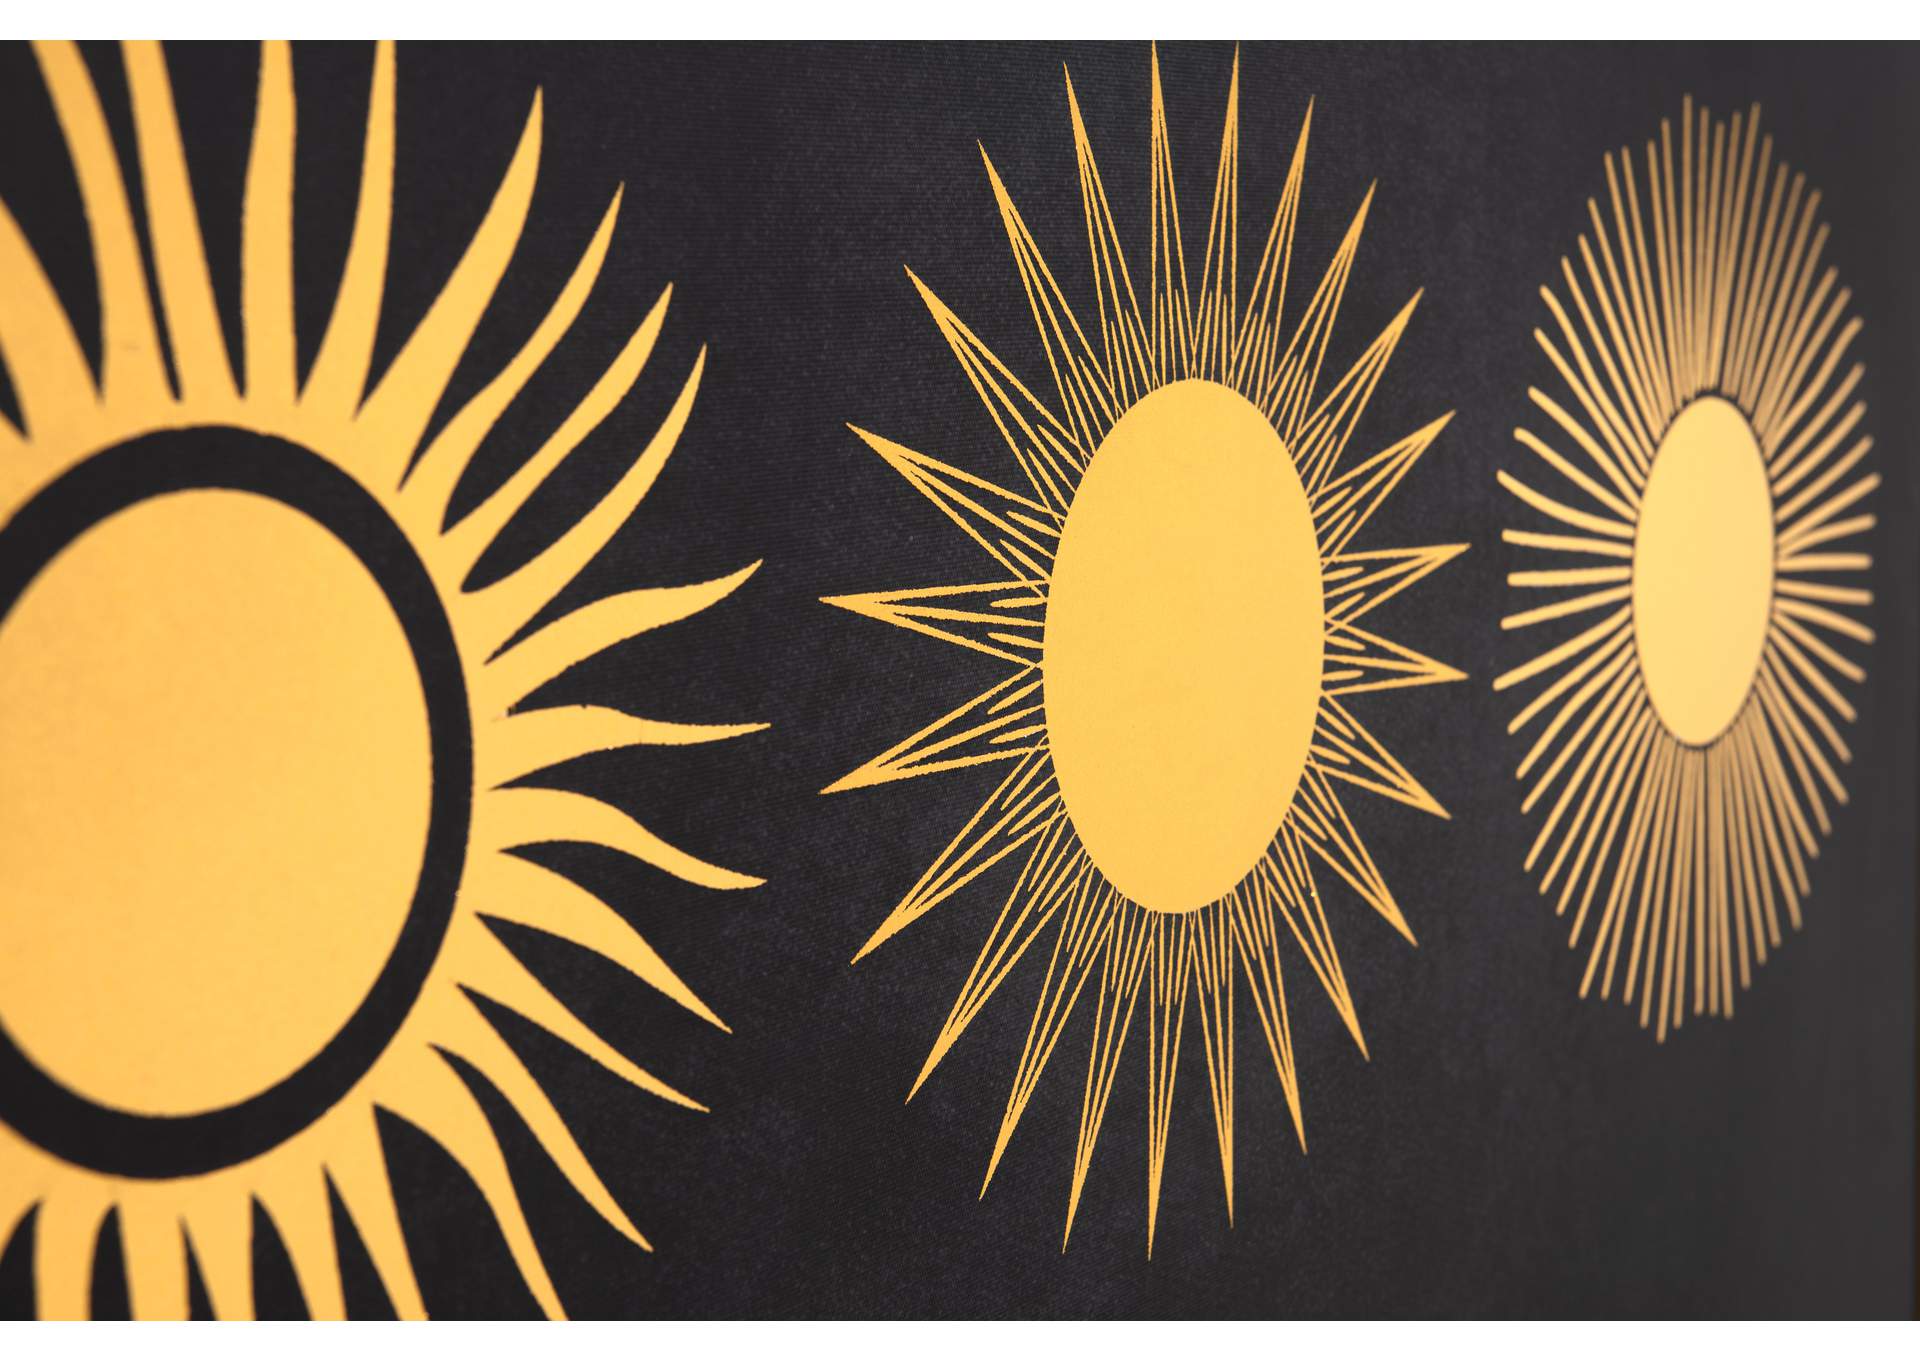 Three Suns Canvas Wall Art Gold & Black,Zuo